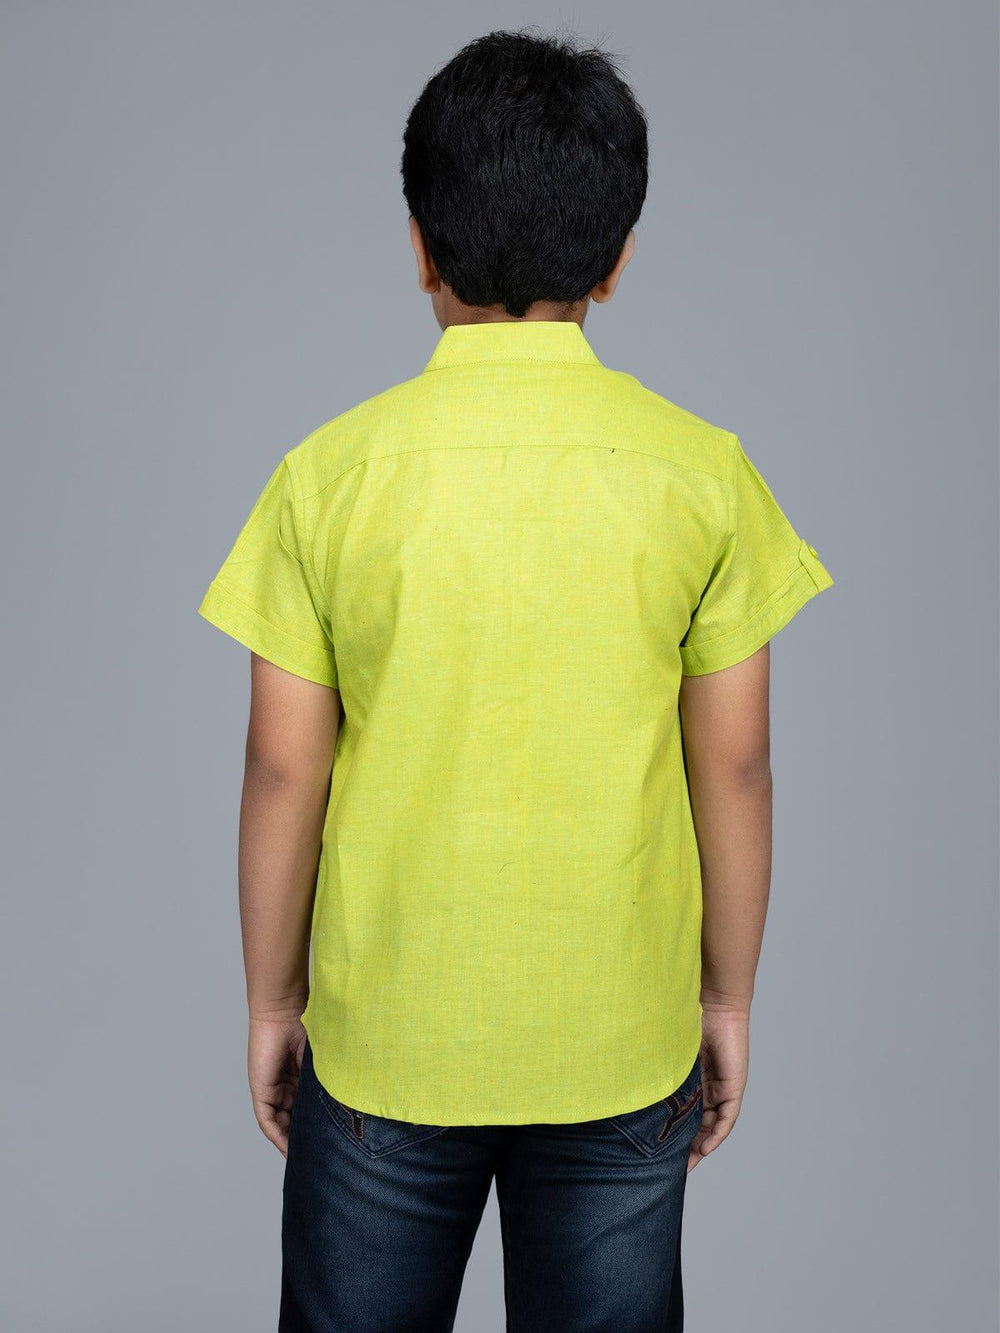 Handwoven Cotton Green Boys Shirt - WeaversIndia